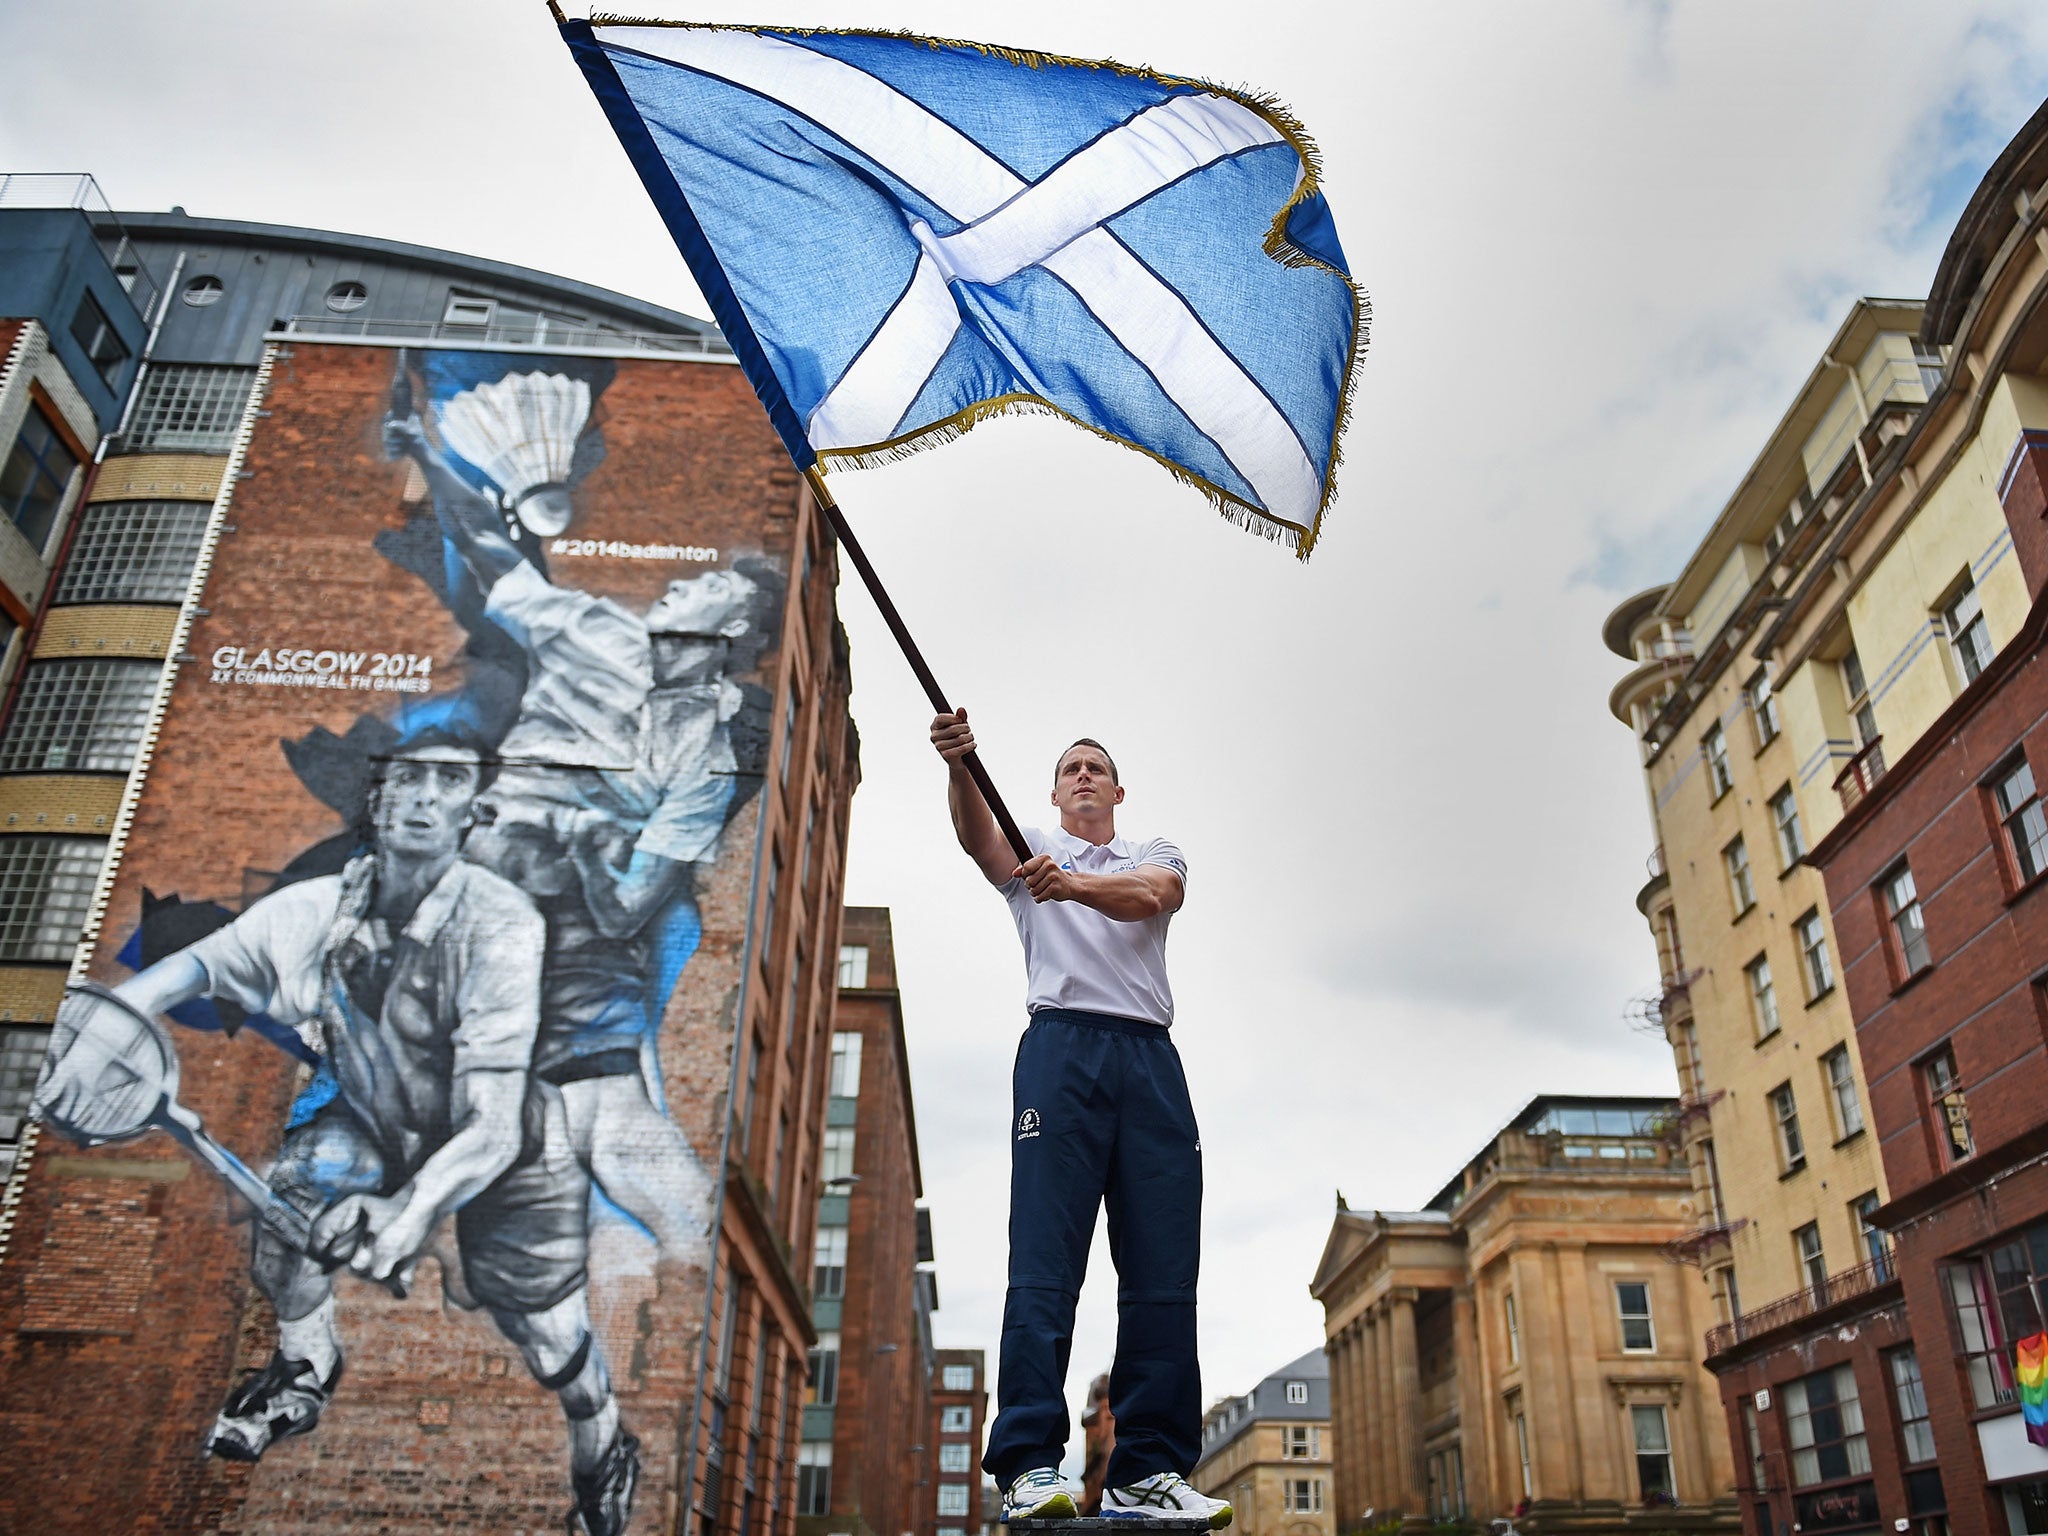 Euan Burton, multiple World and European medal winning judoka poses with the Scottish Saltire flag